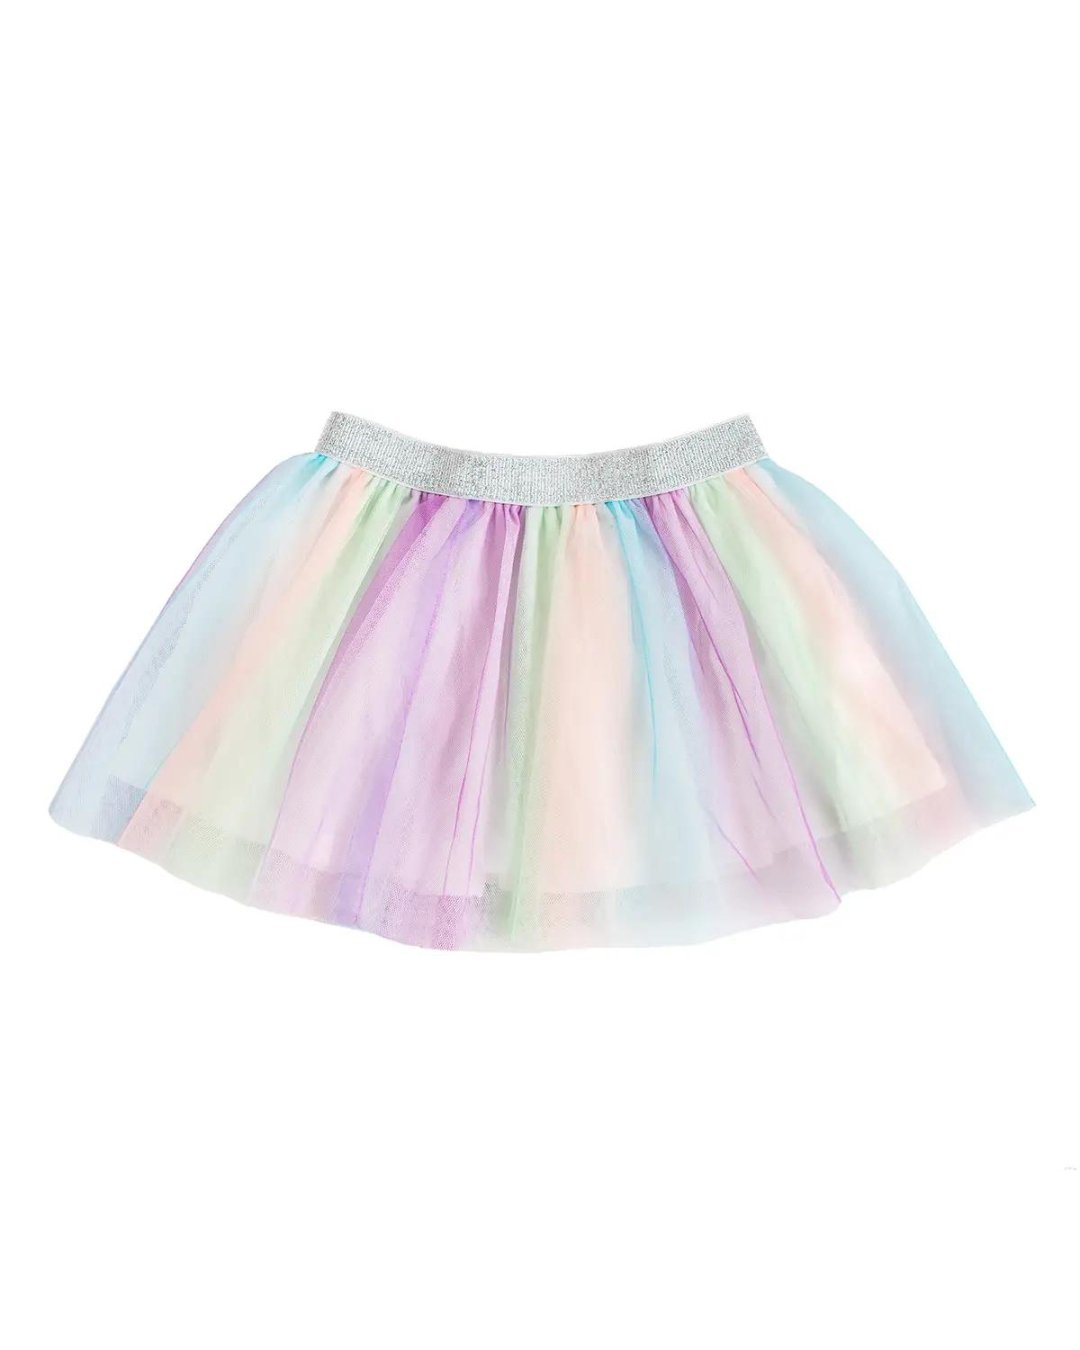 Girls Rainbow Dream Tutu Skirt - Blissfully Lavender BoutiqueSweet Wink